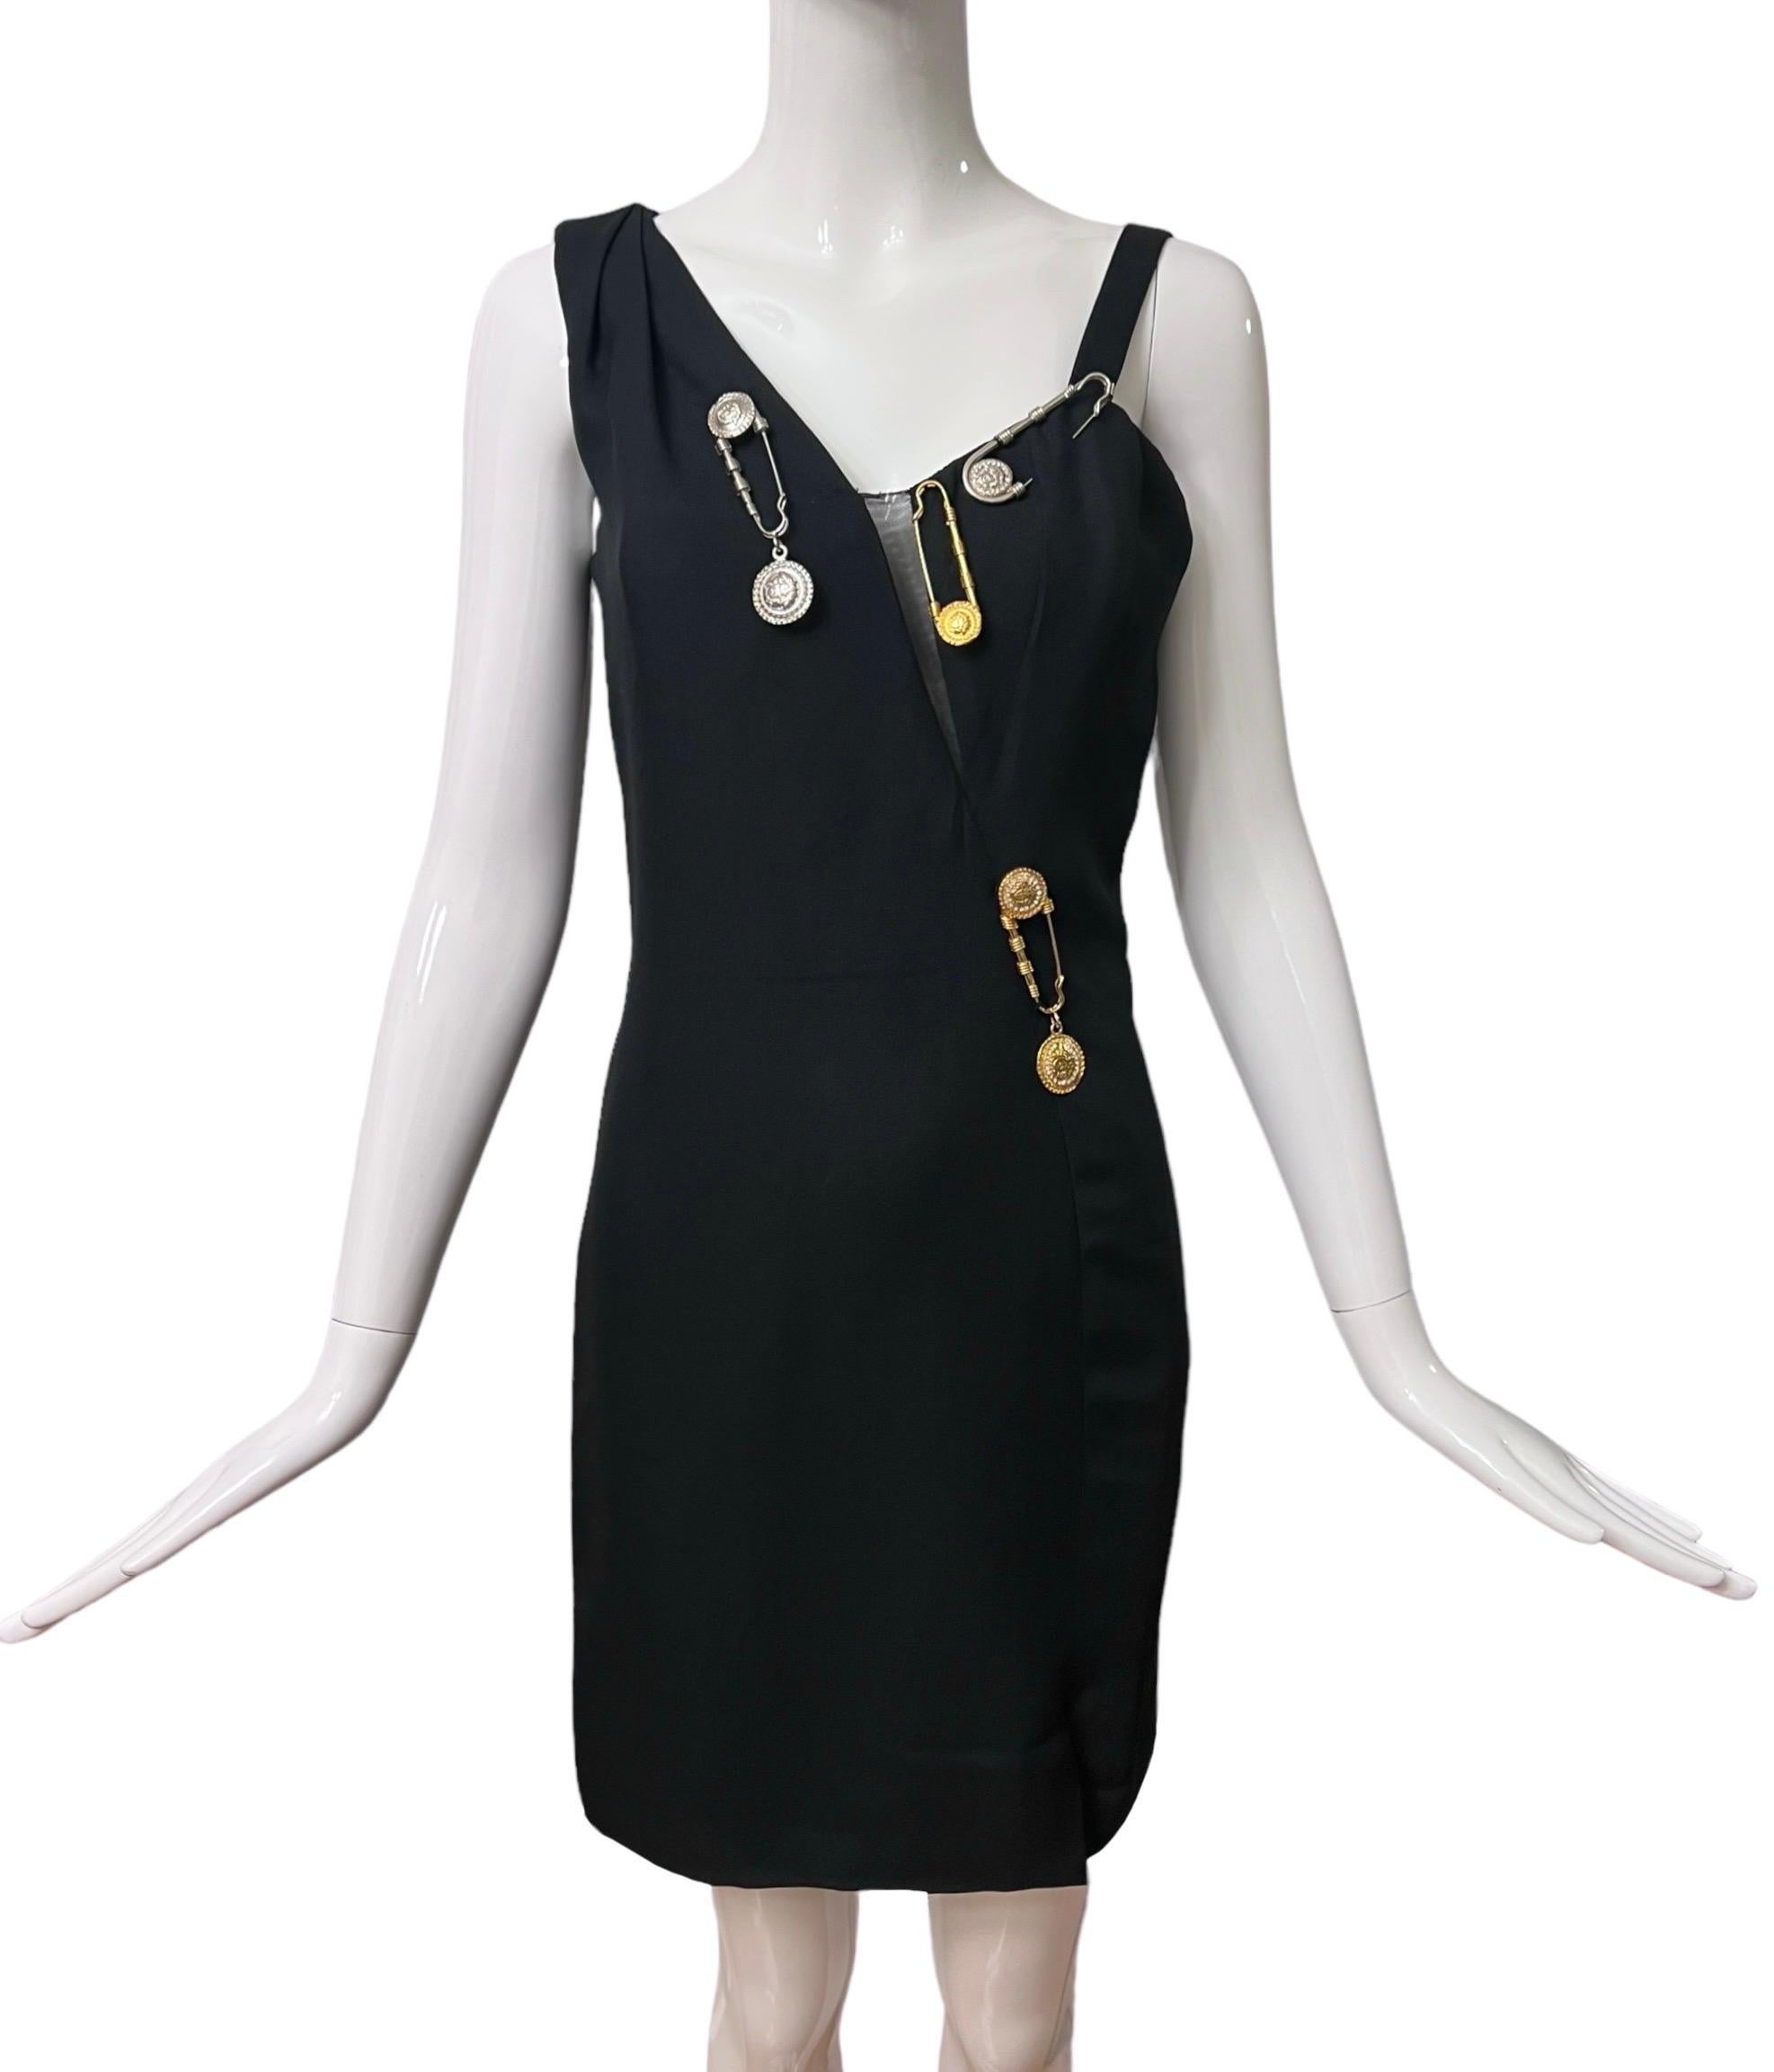 Women's S/S 1994 Gianni Versace Safety Pin Medusa Embellished Black Mini Dress For Sale